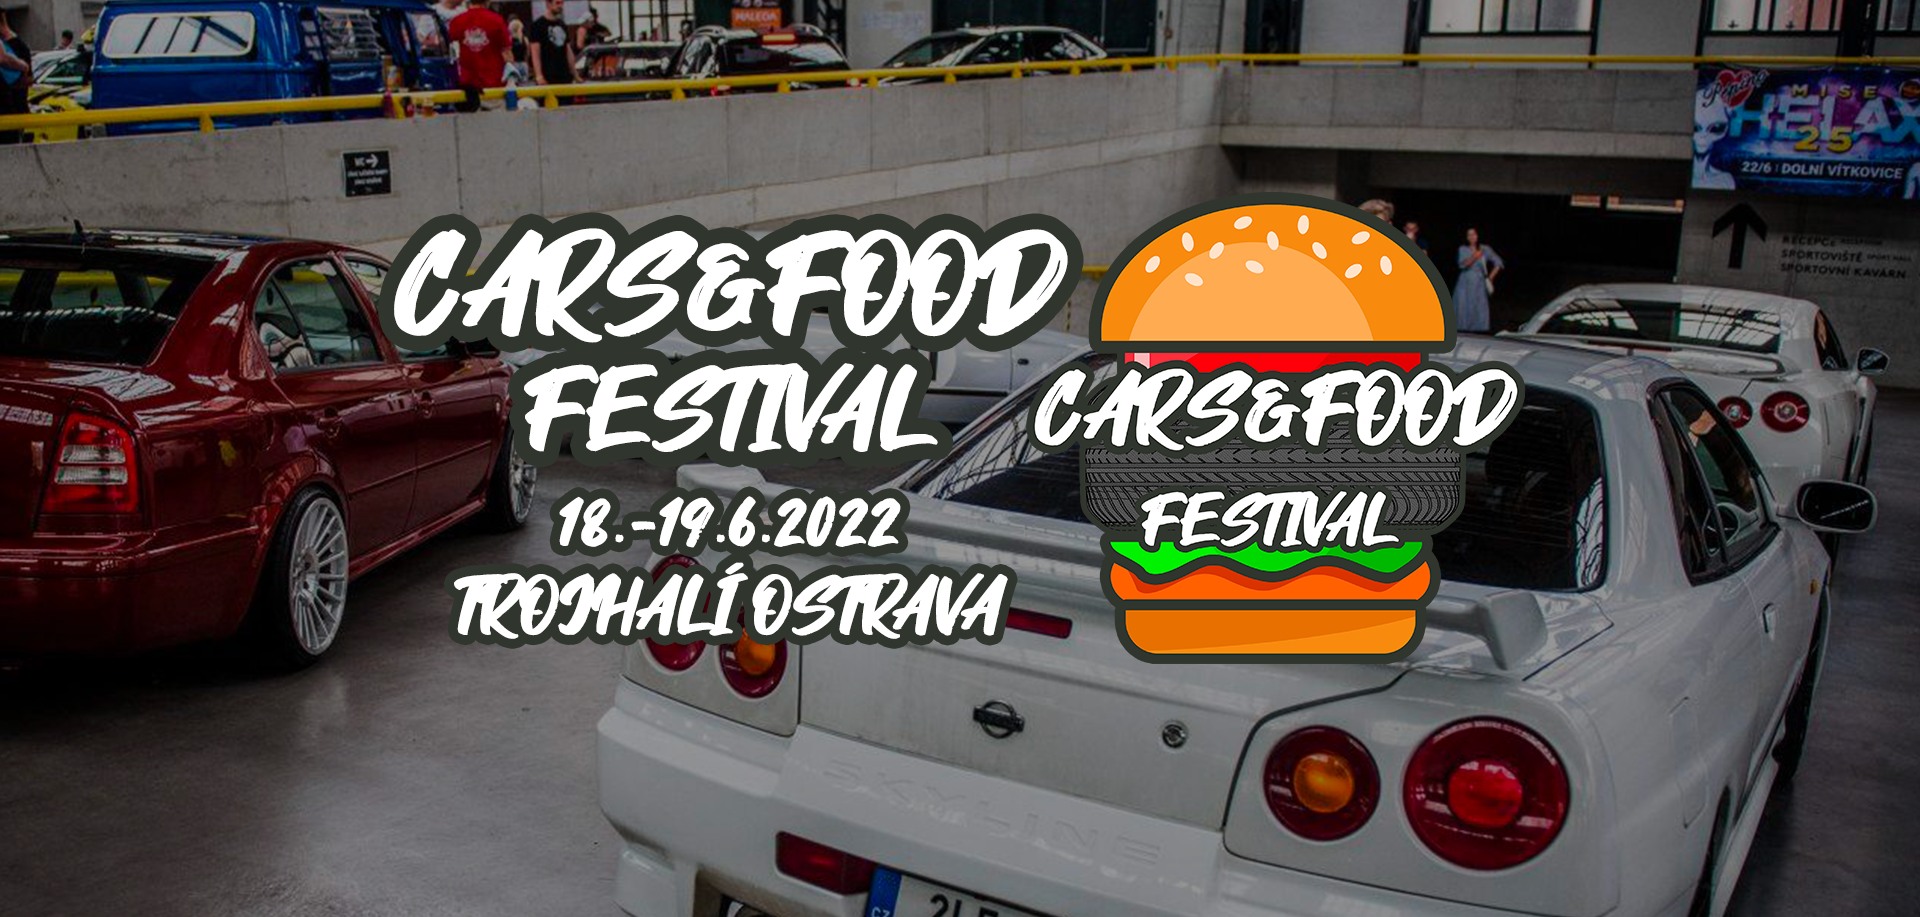 Cars & Food Festival Ostrava